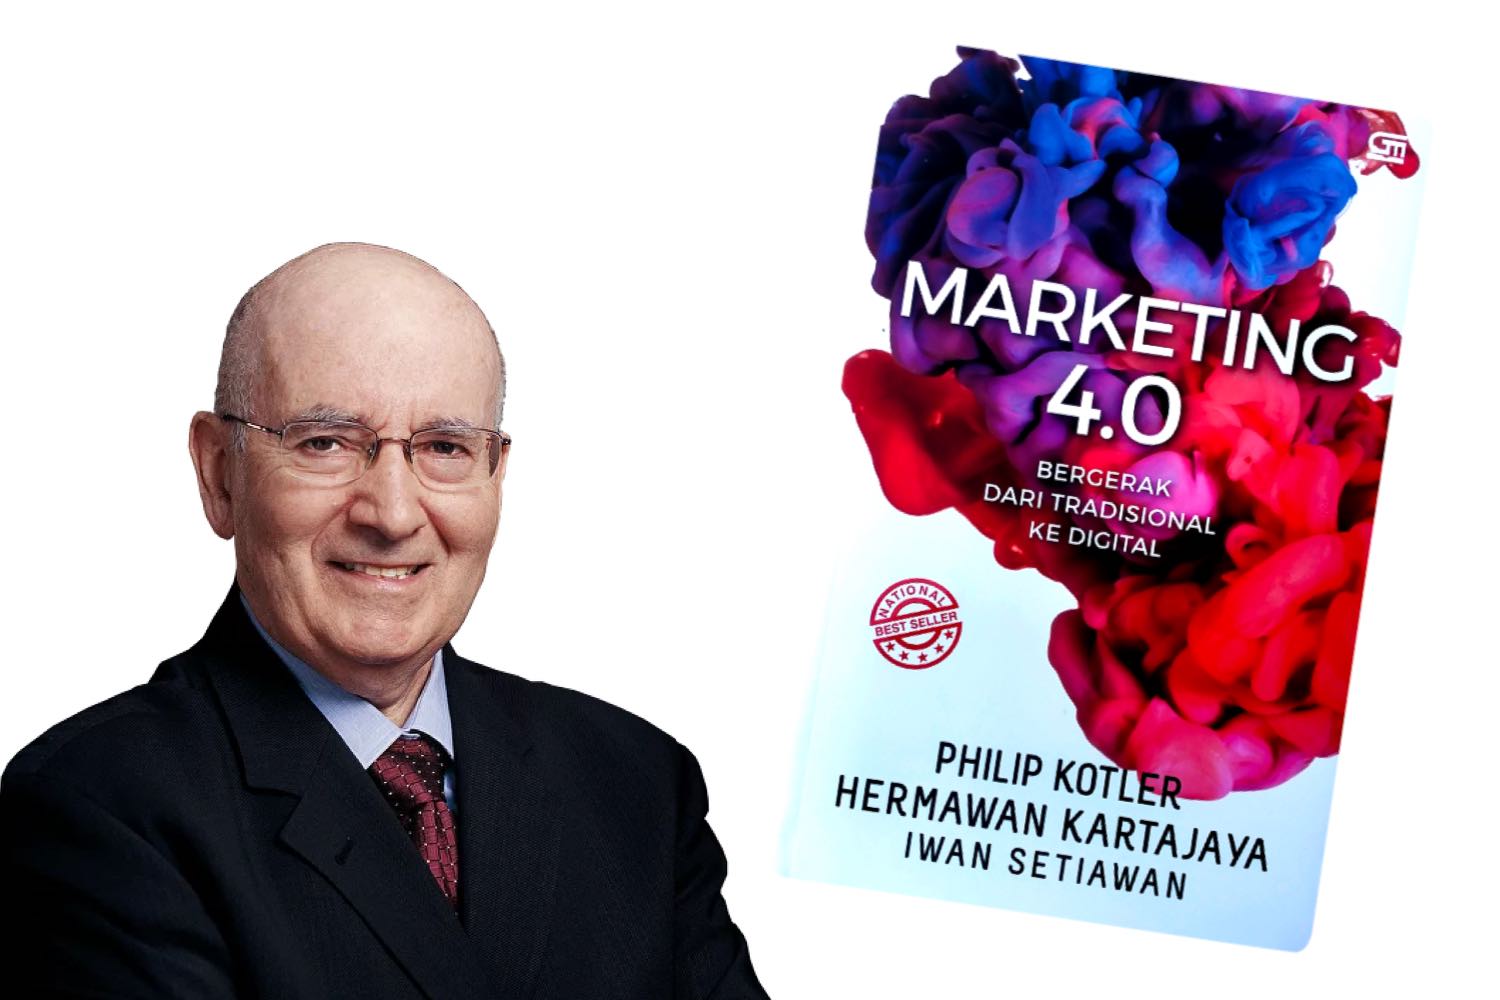 Marketing 4.0, Marketing 4.0 Philip Kotler